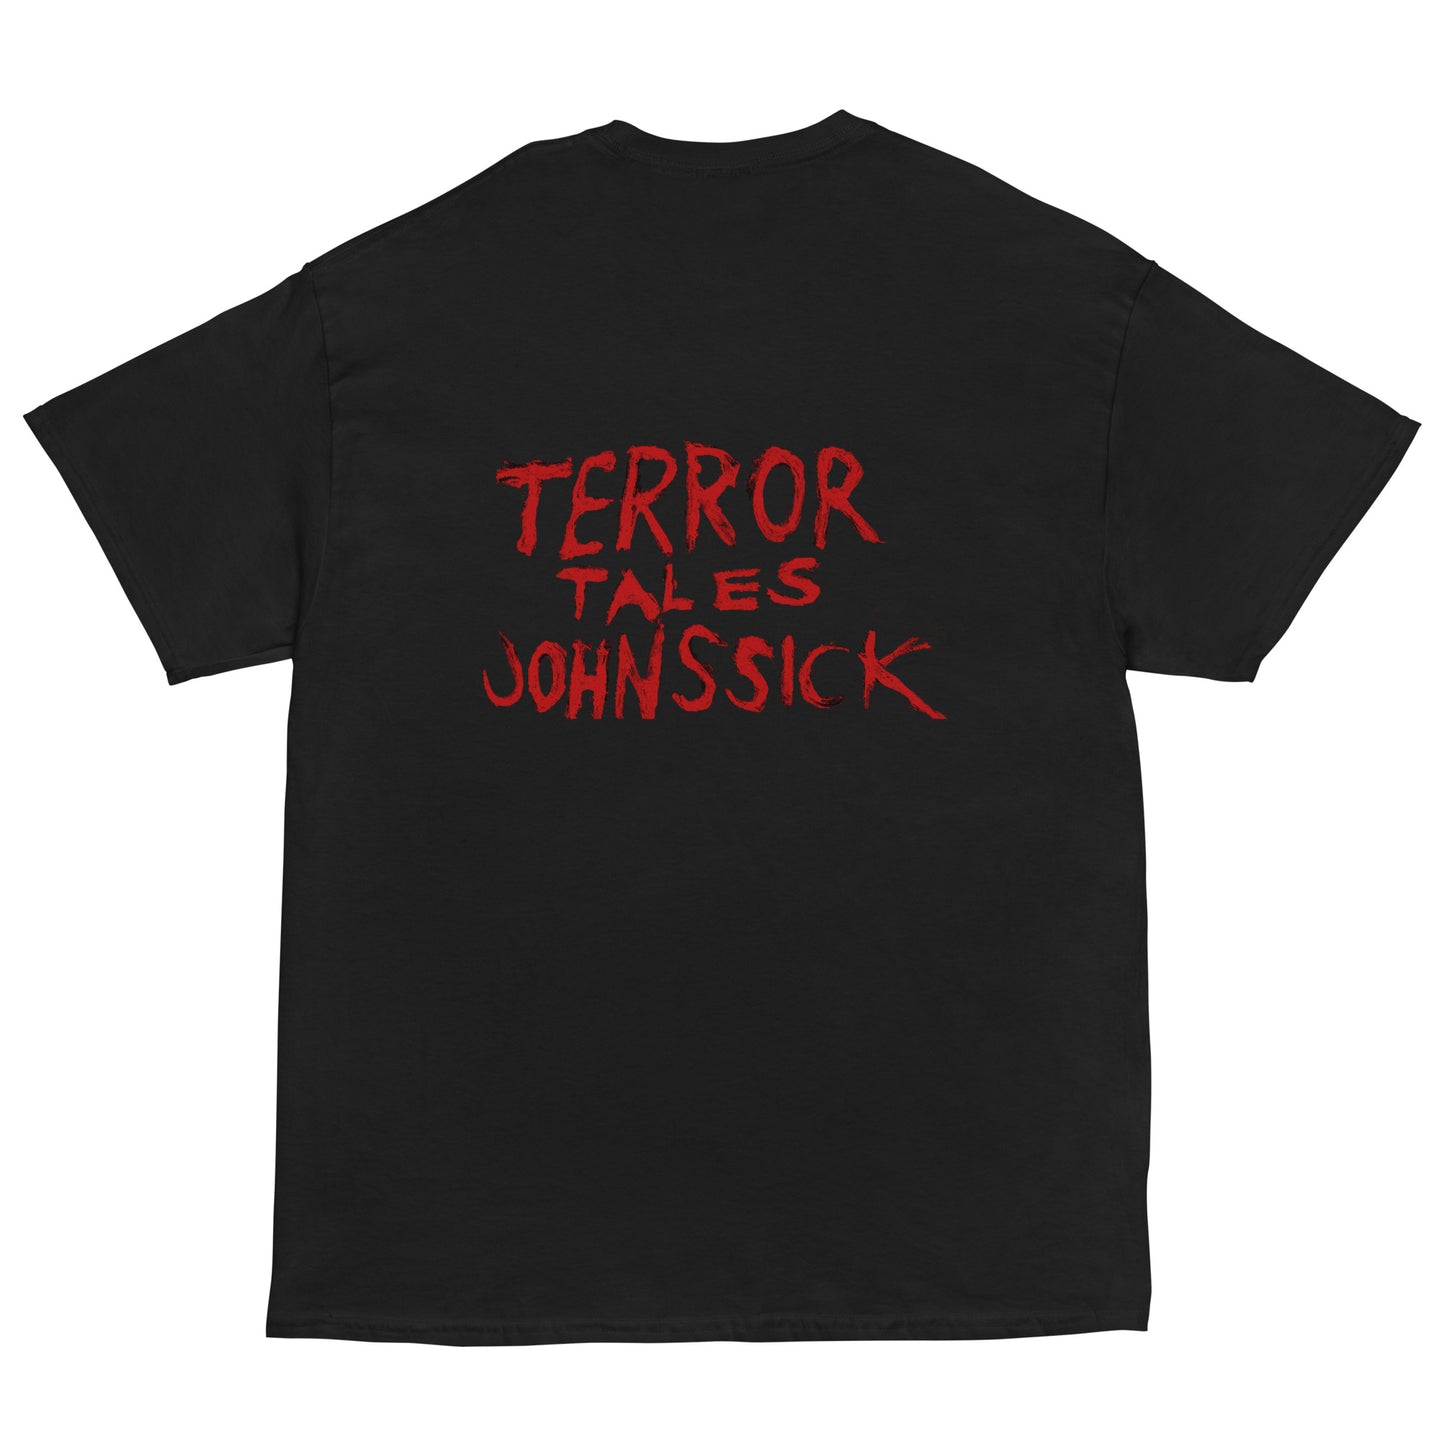 JOHNSSICK x TERROR TALES Jason T-shirt